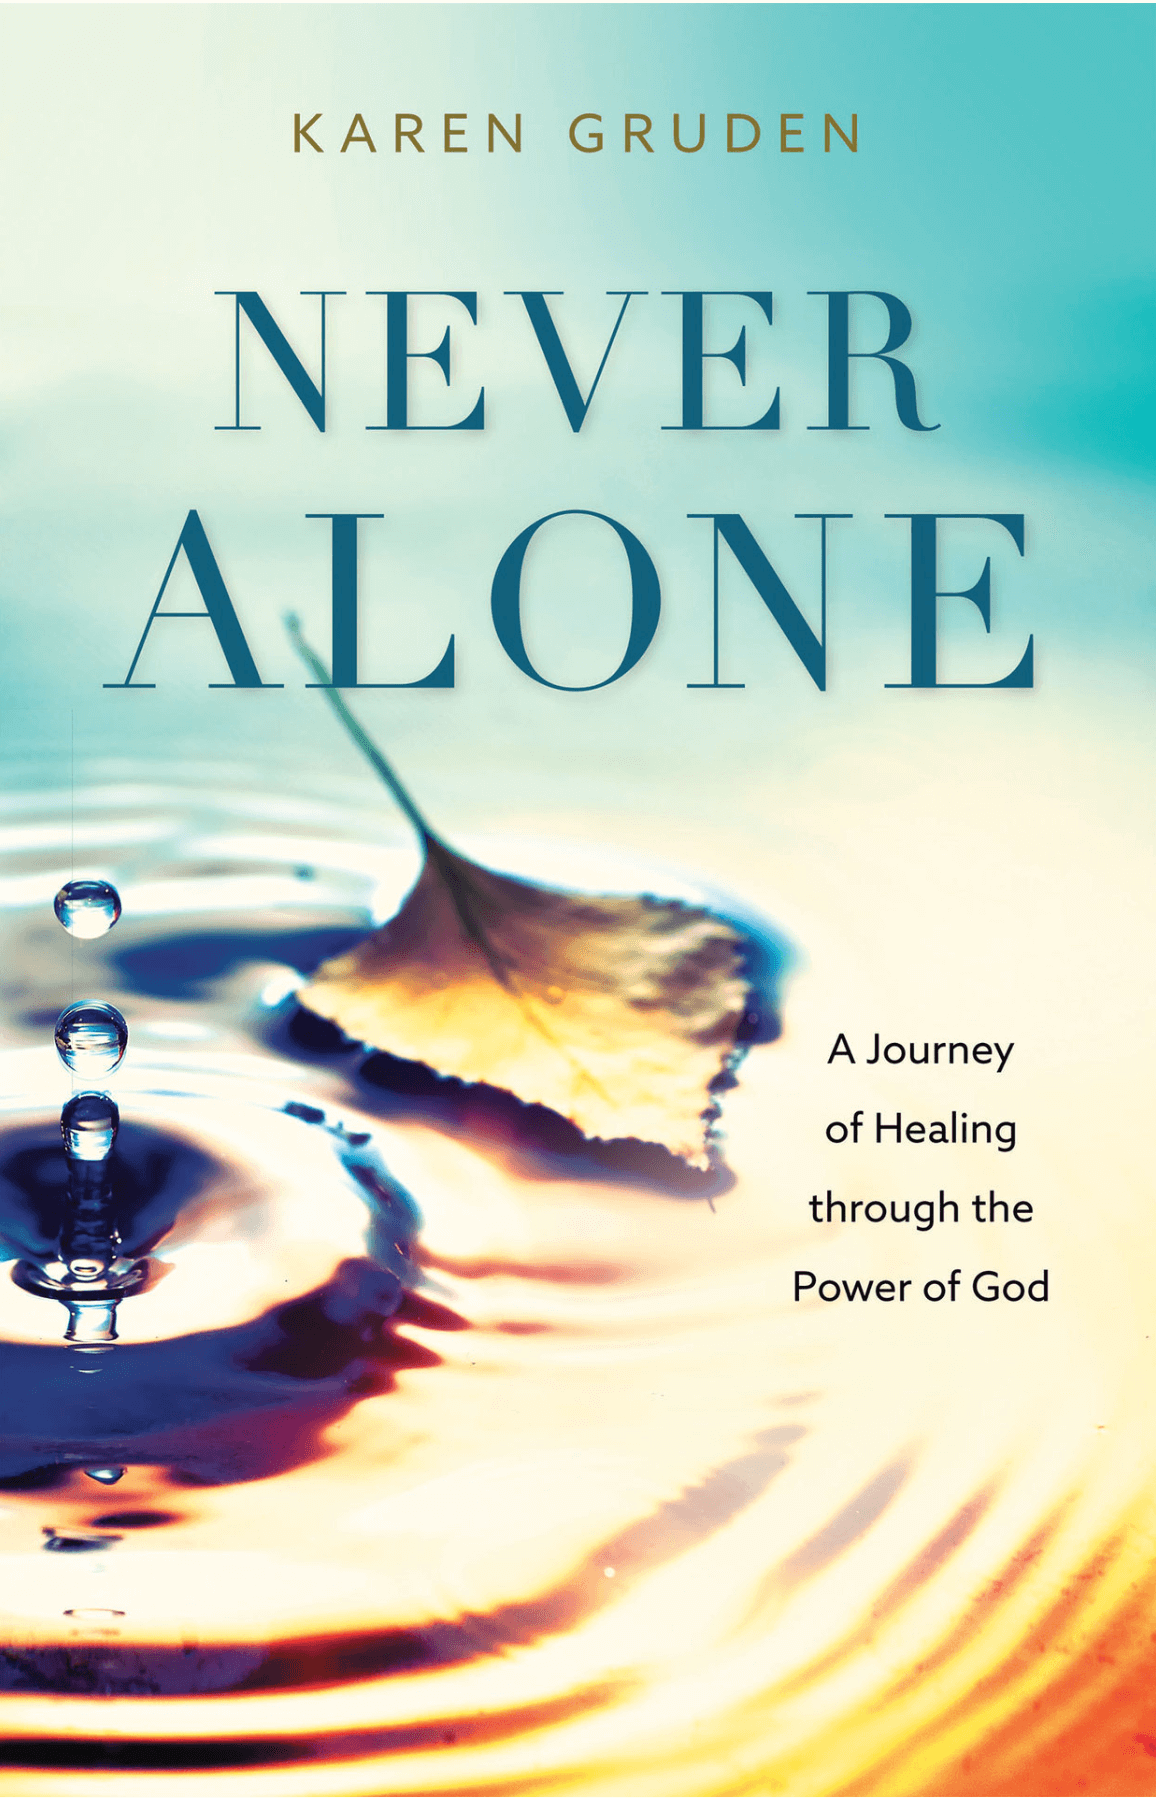 Never Alone book by Karen Gruden